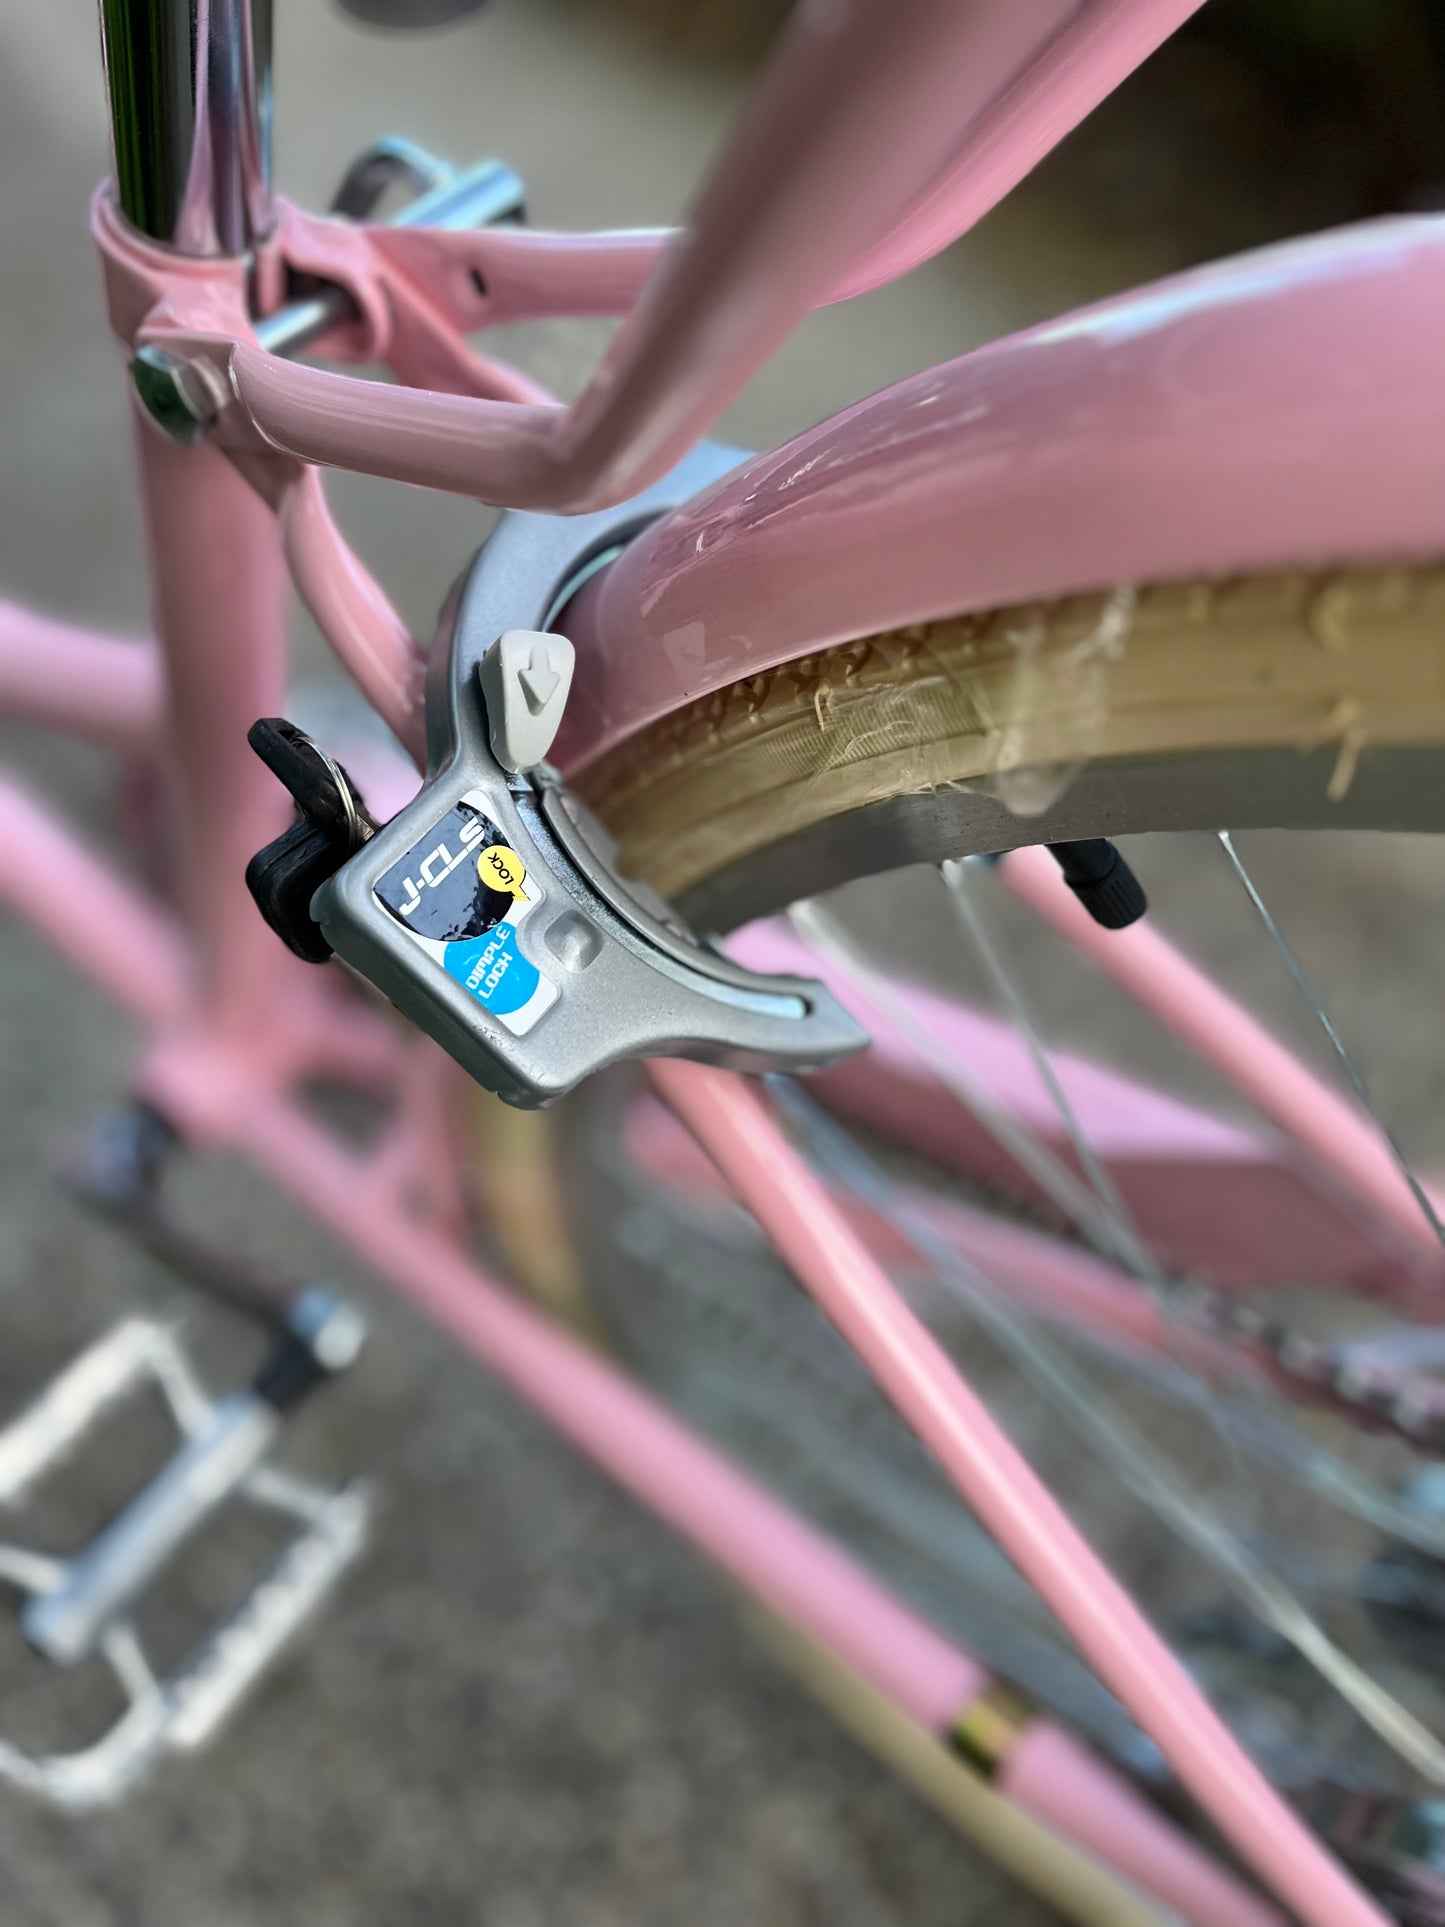 UC24 model City Bike, Pink 24 inch 6 speeds c/w basket and rear rack